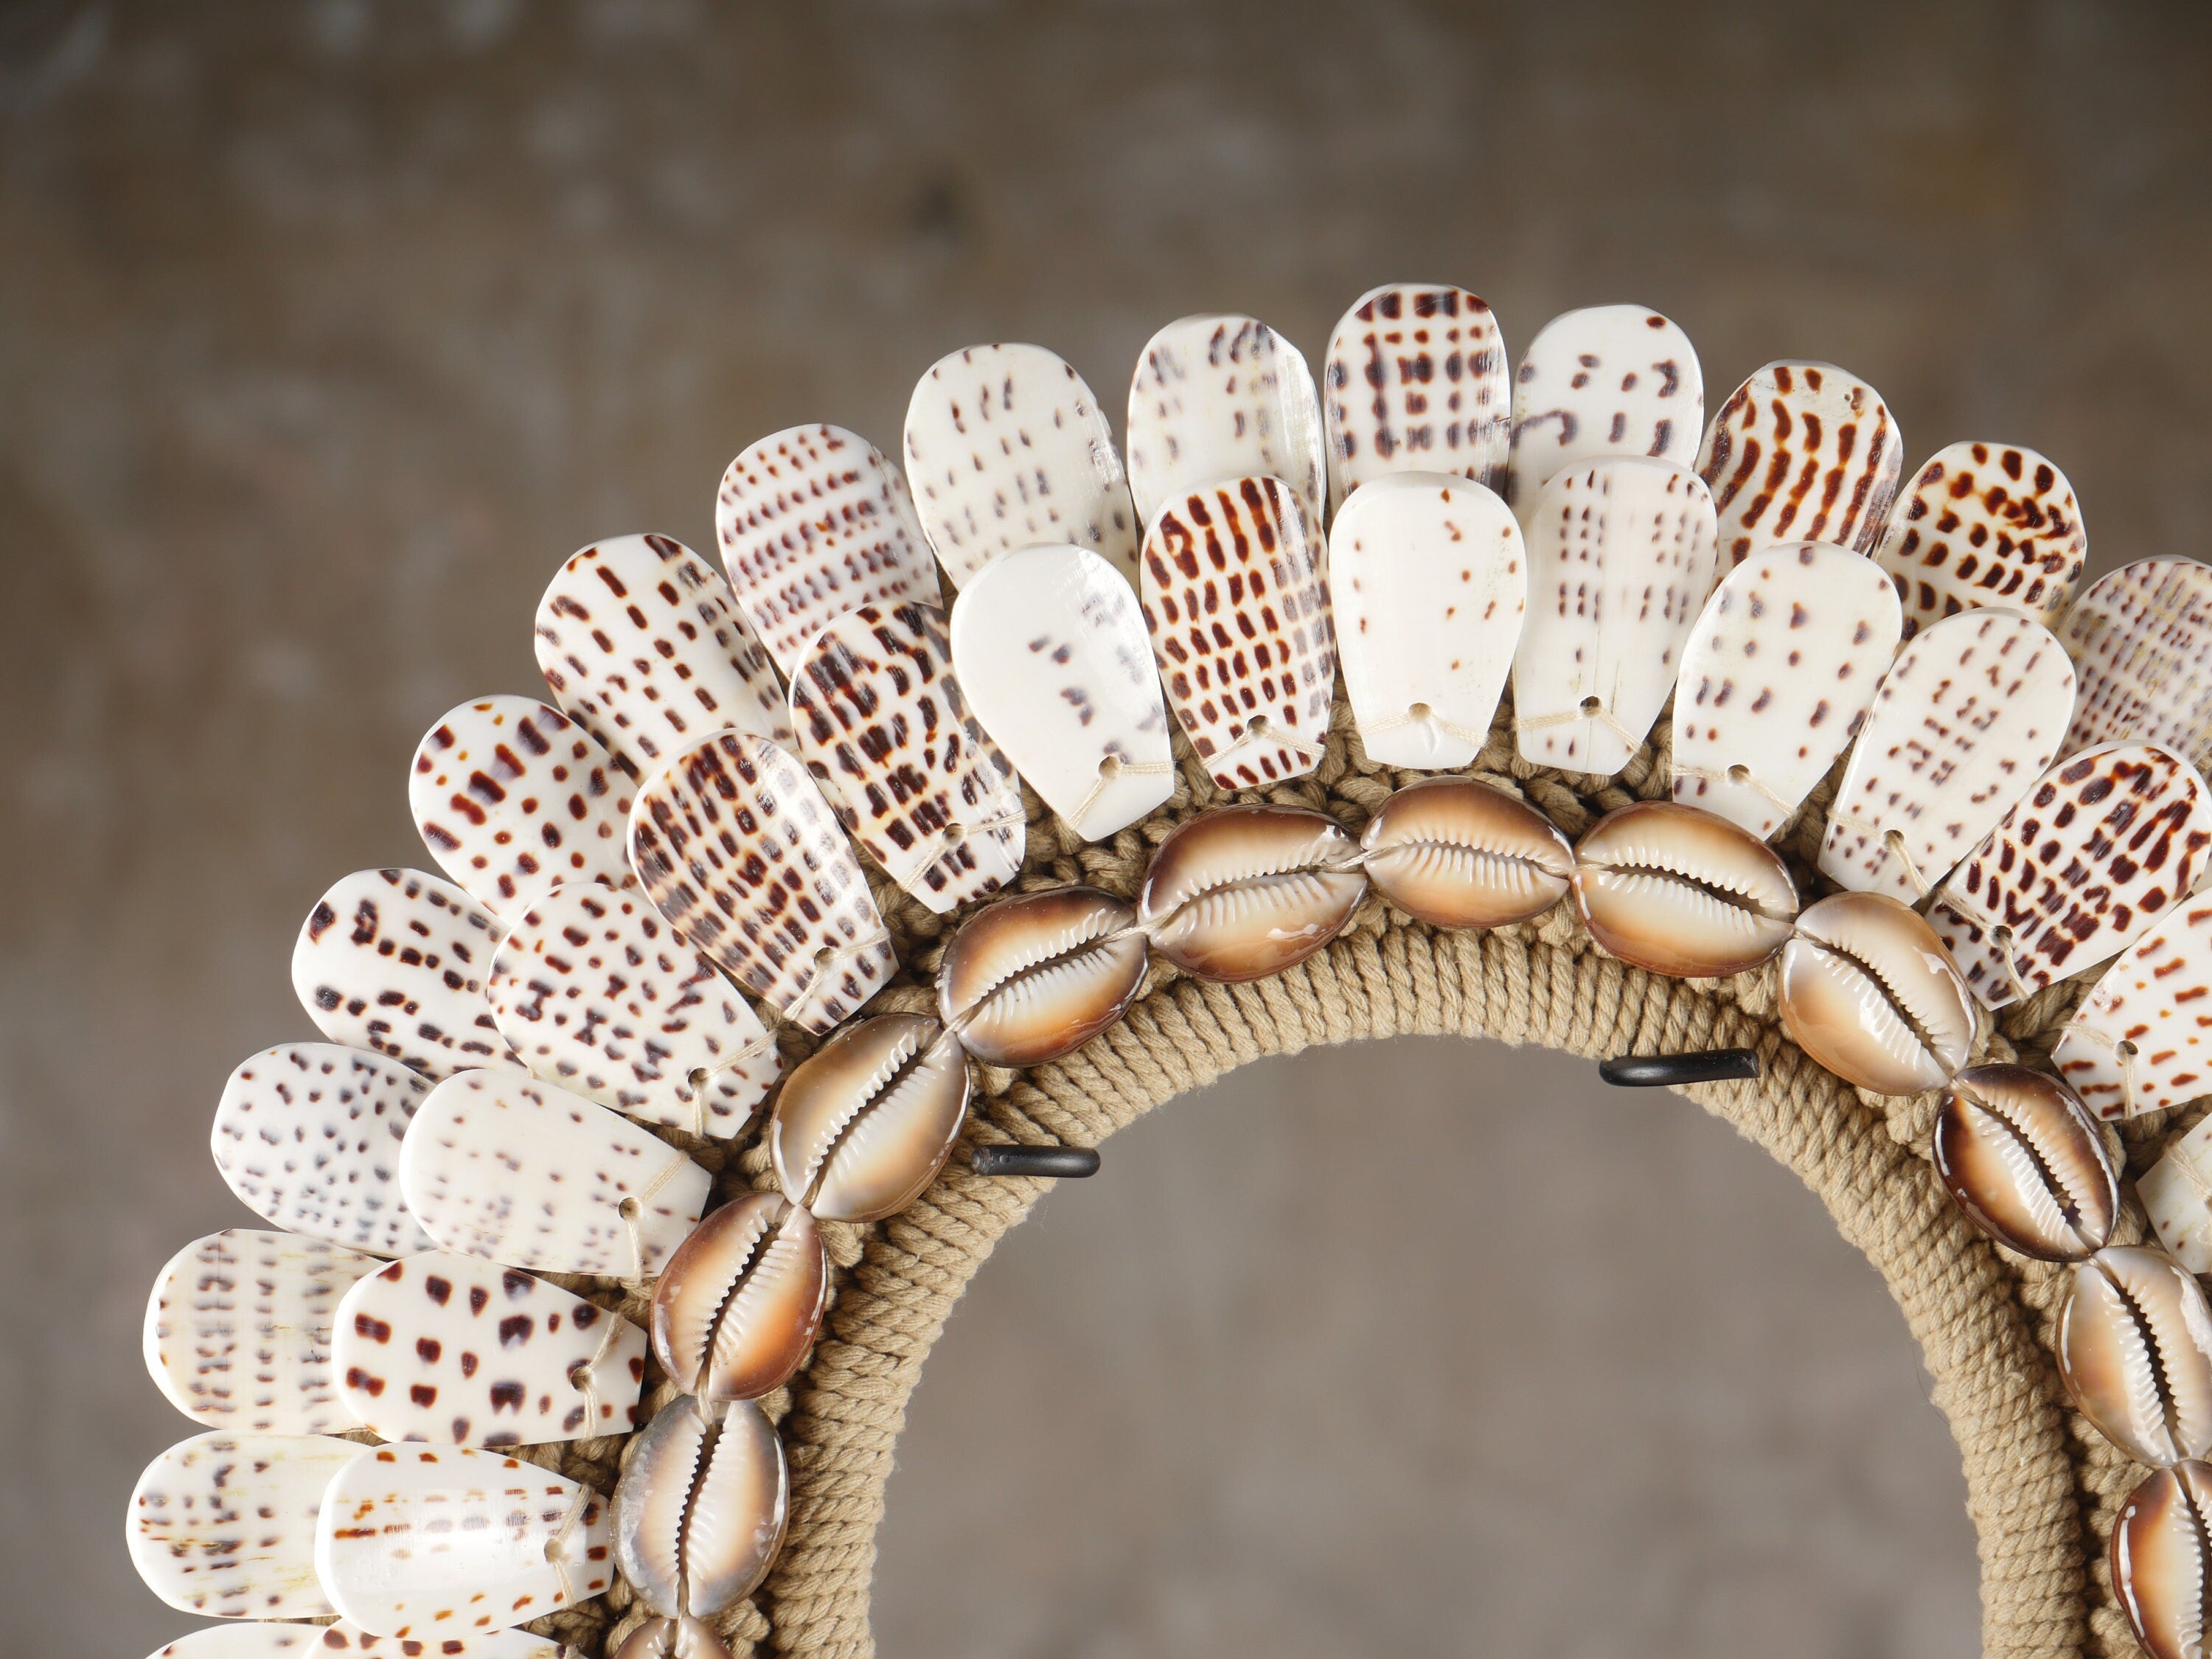 The Leopard Conus Papua Necklace - Set of Two Papua Deco - Tribal Necklace - Boho Decor - Cowrie Shell - Bohemian Chic